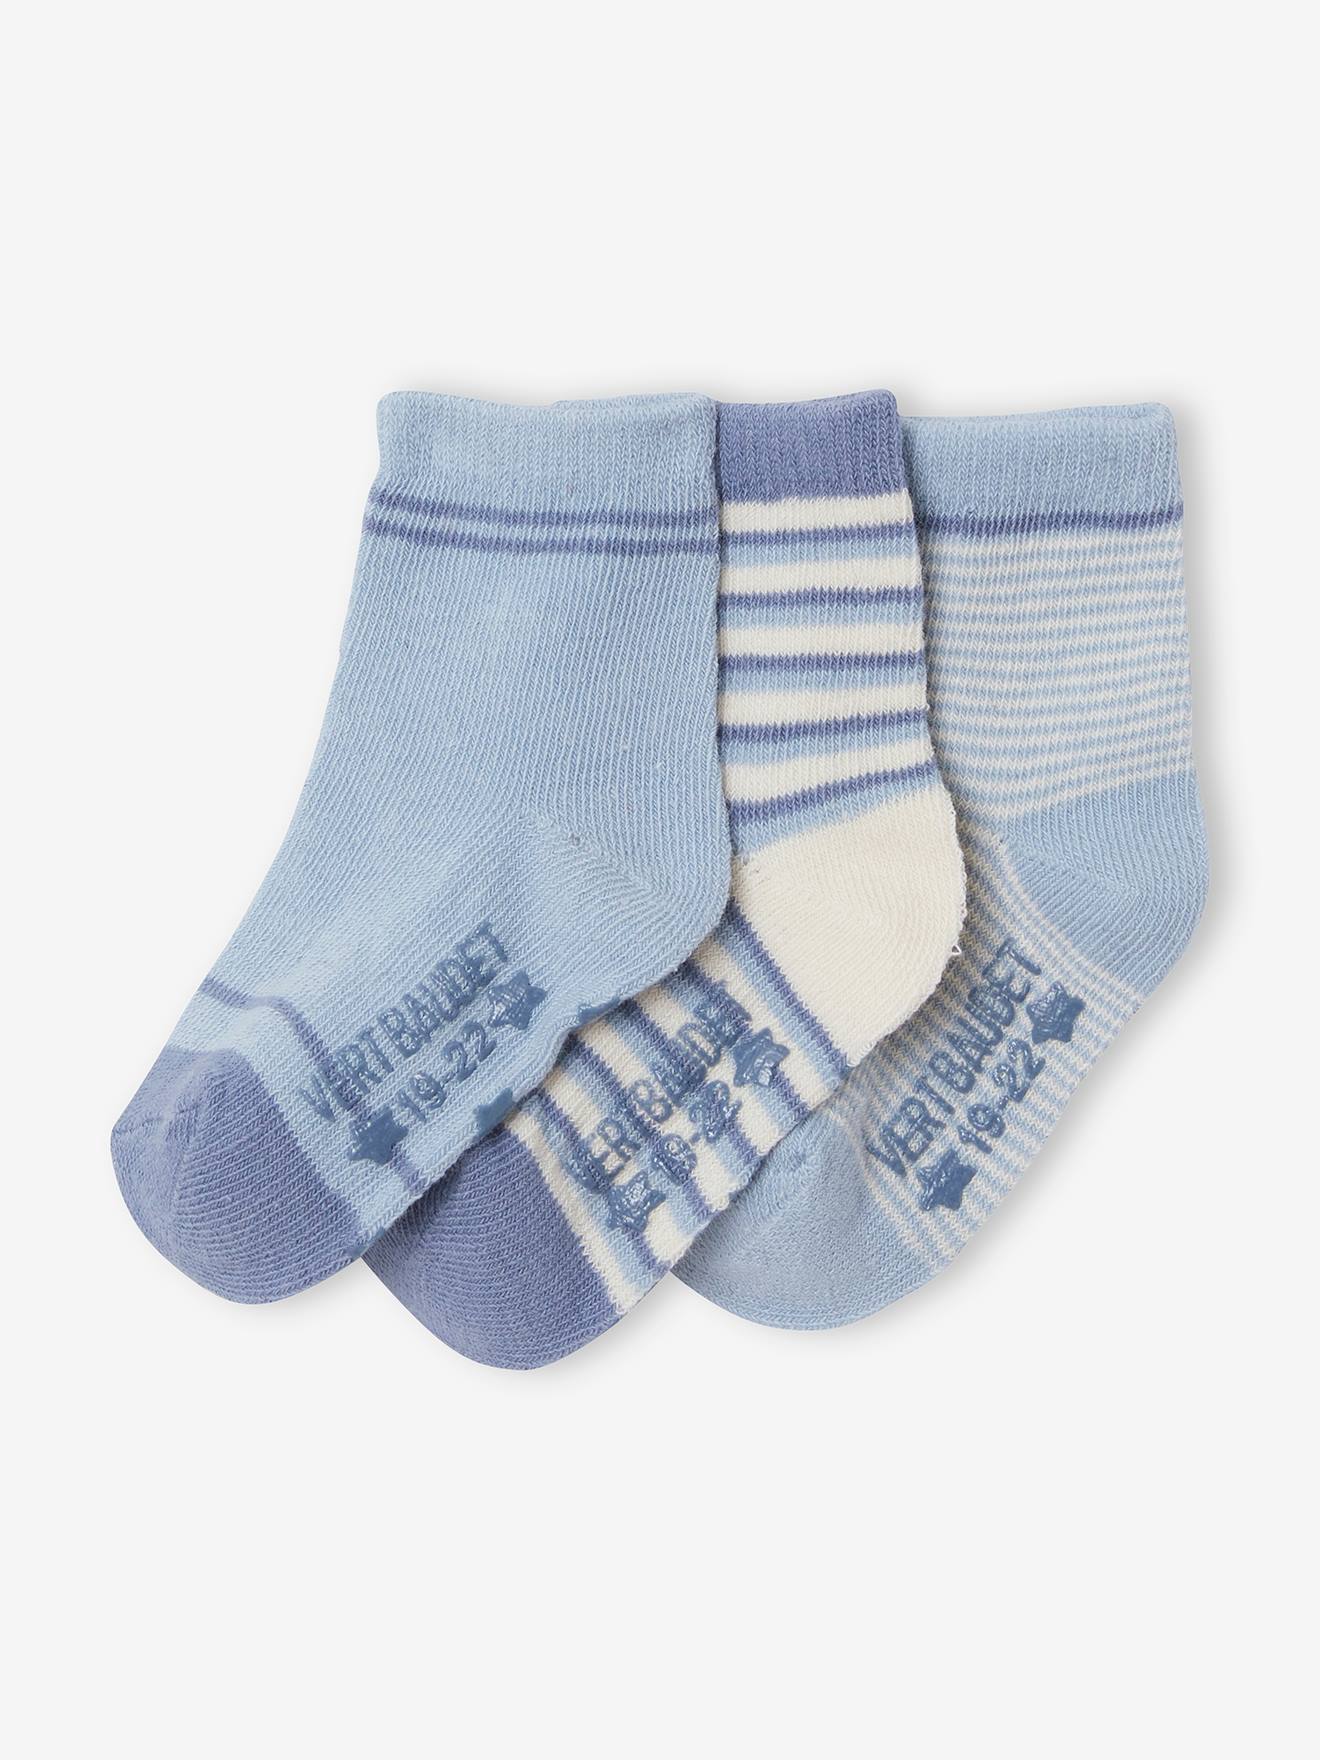 Crib Shoe Socks Unisex Baby Royal Blue Booties 5 Preemie and Newborn Sizes 